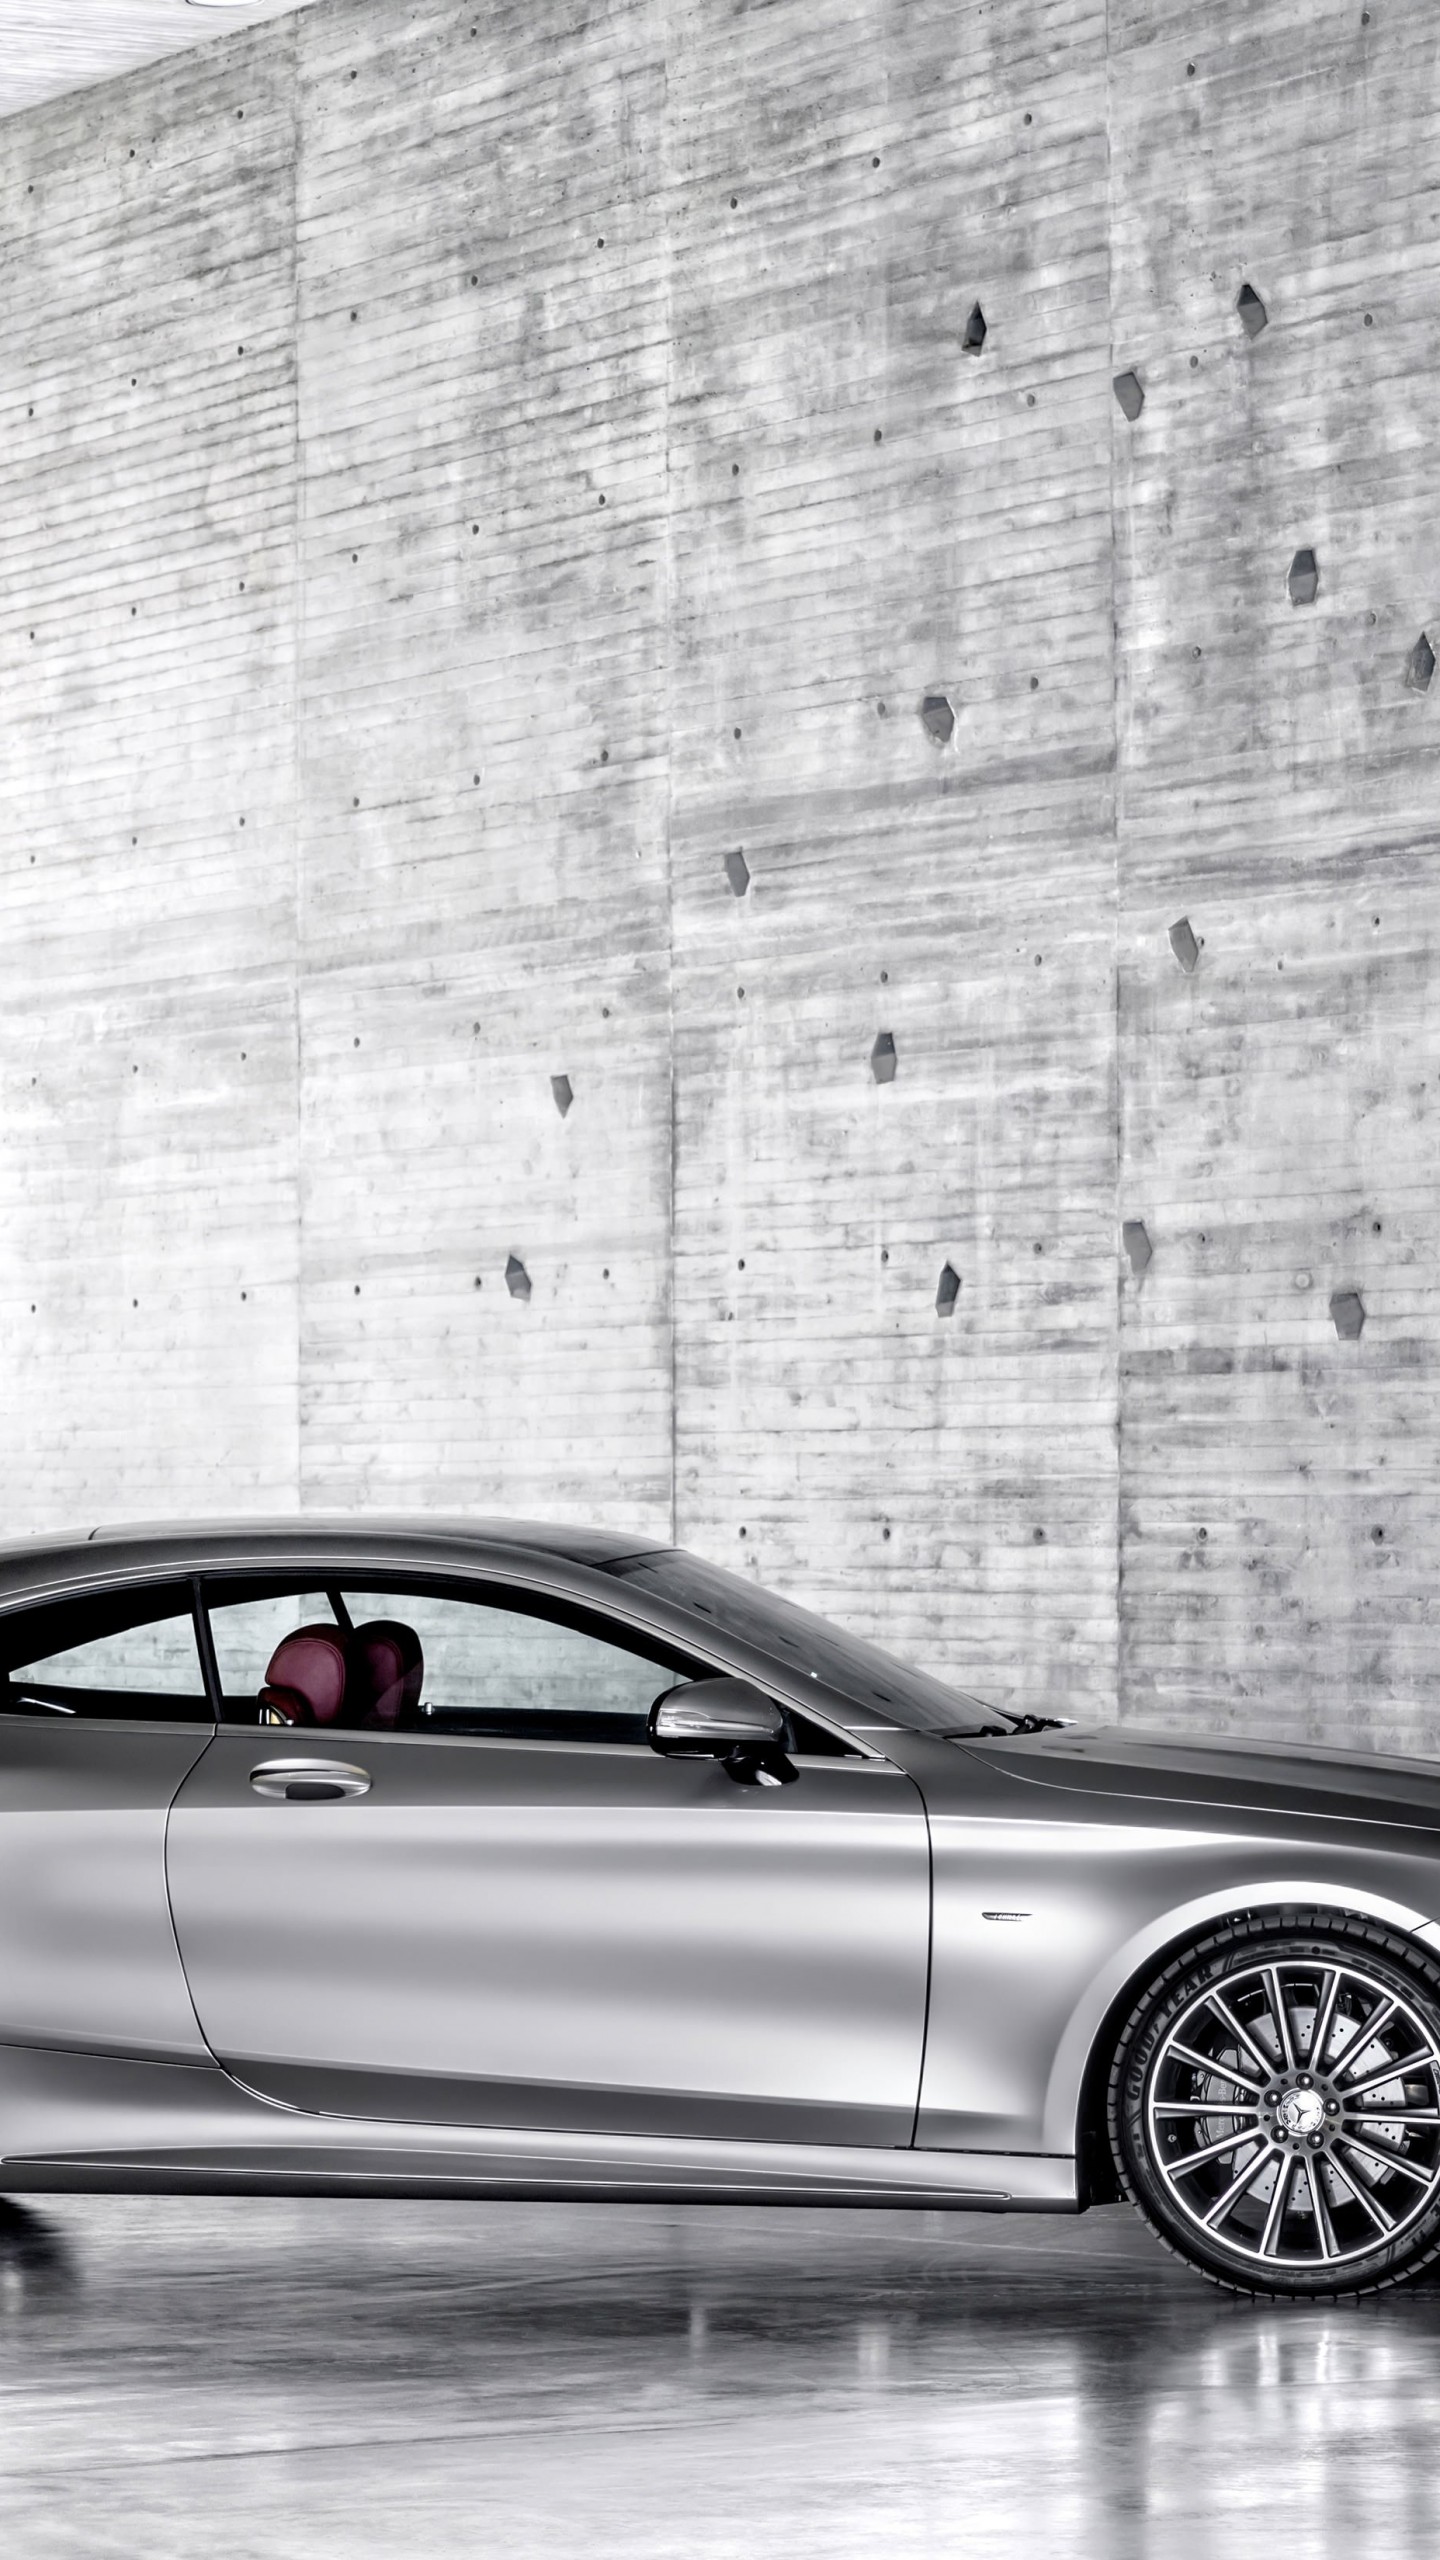 2015 Mercedes-Benz S-Class Coupe Wallpaper for Google Nexus 6